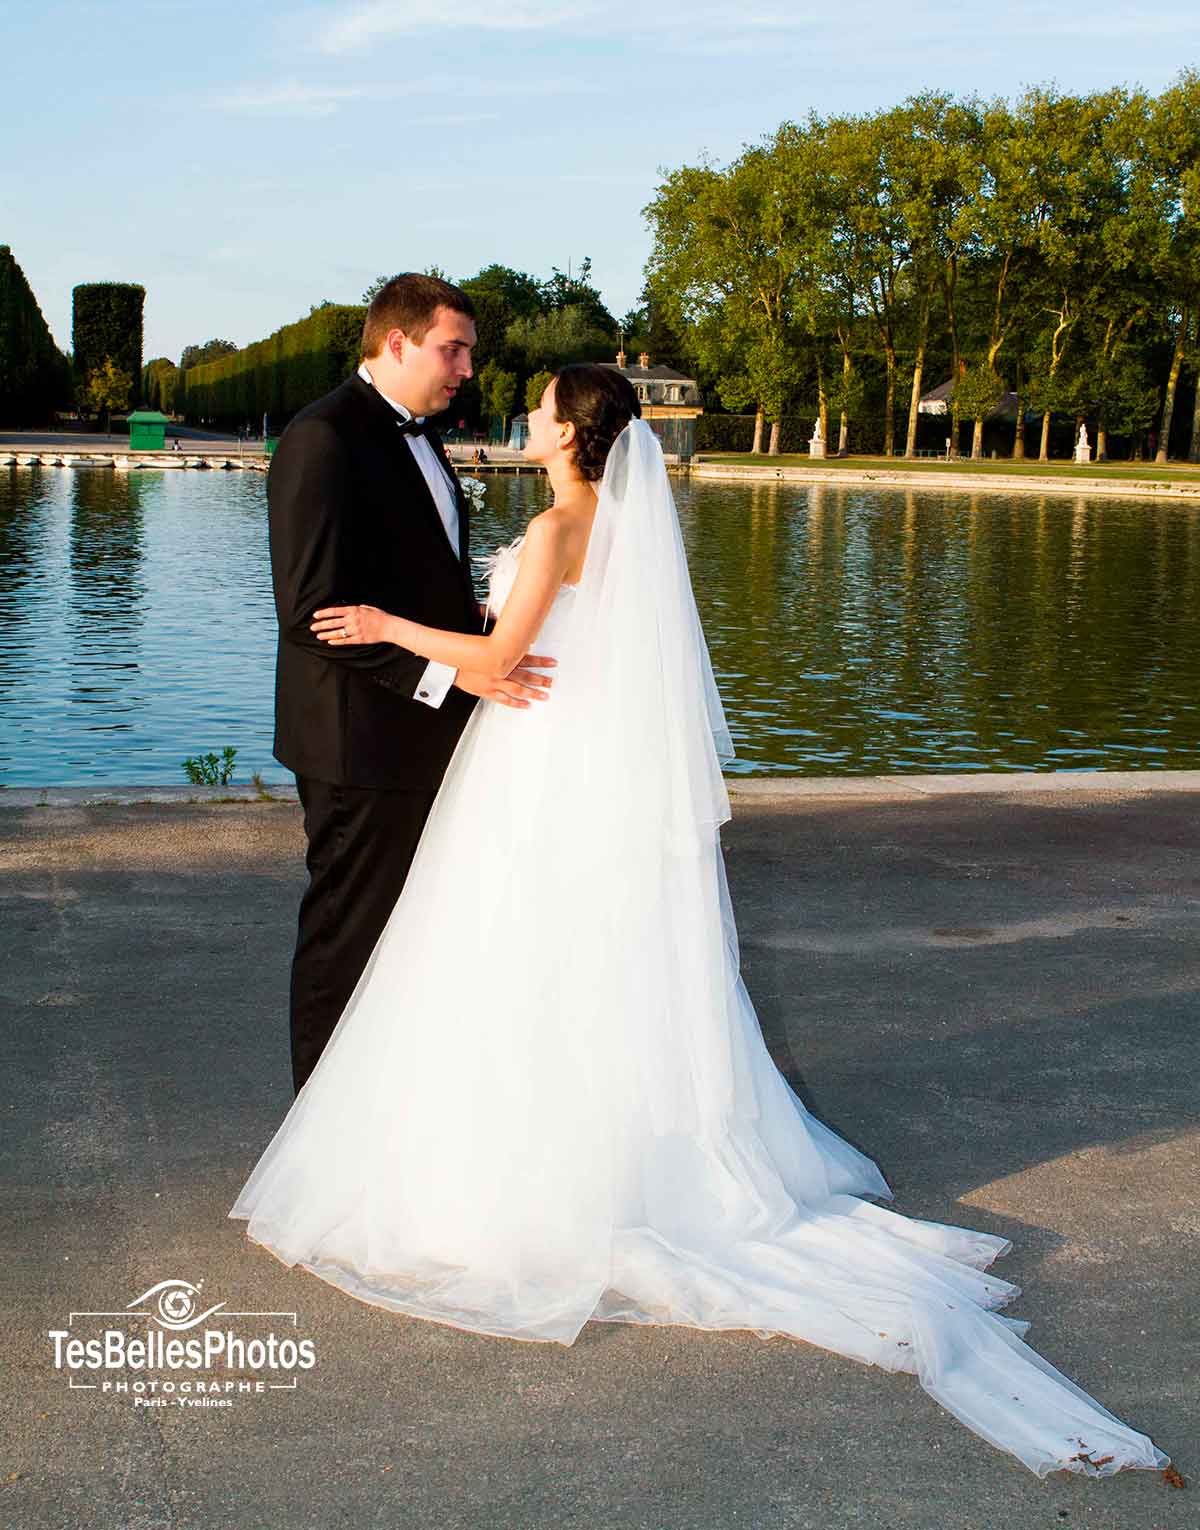 Photographe de couple mariage Versailles, séance photo couple au jardin de Versailles